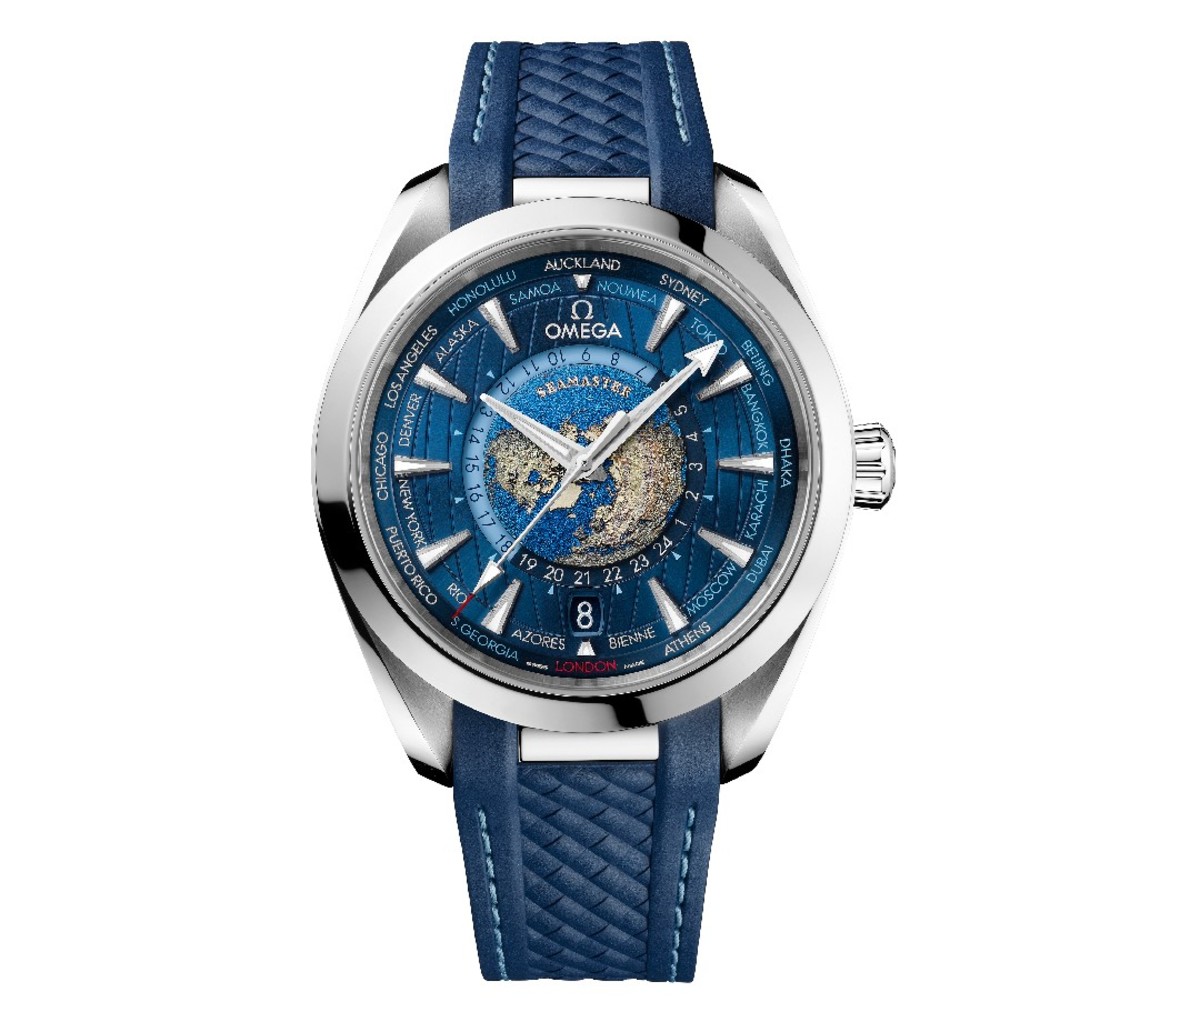 Closeup of Omega Aqua Terra 150 Worldtimer watch